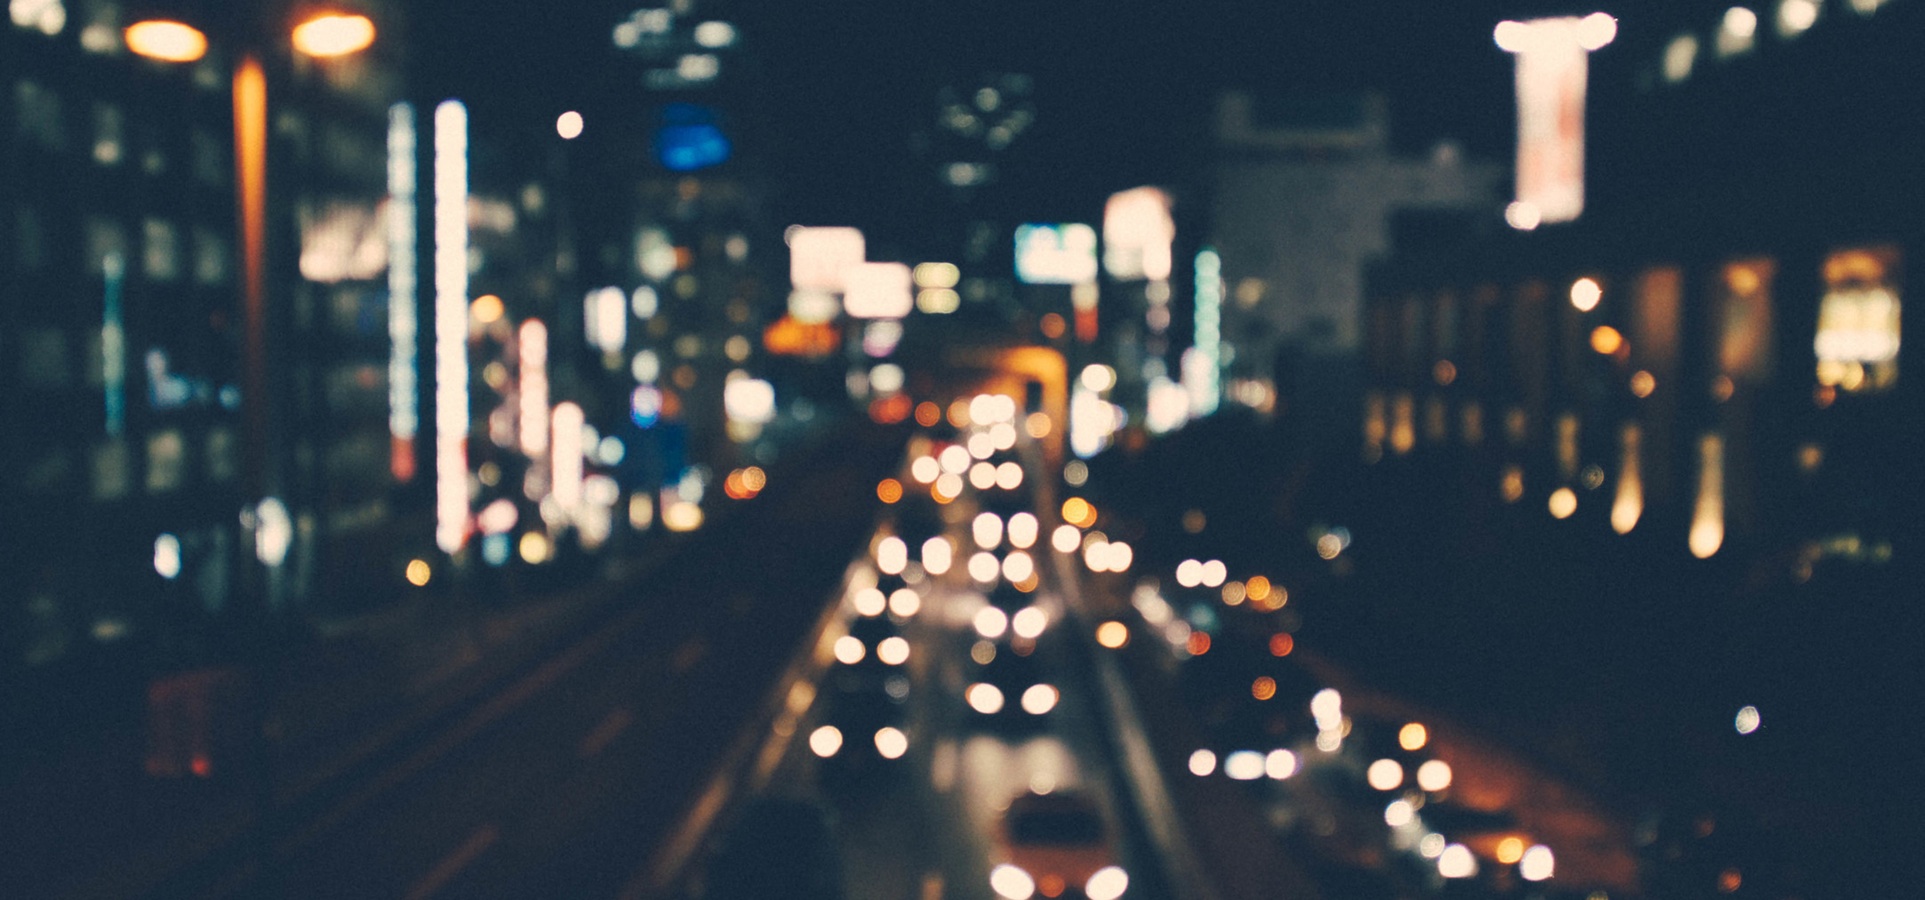 Traffic at night